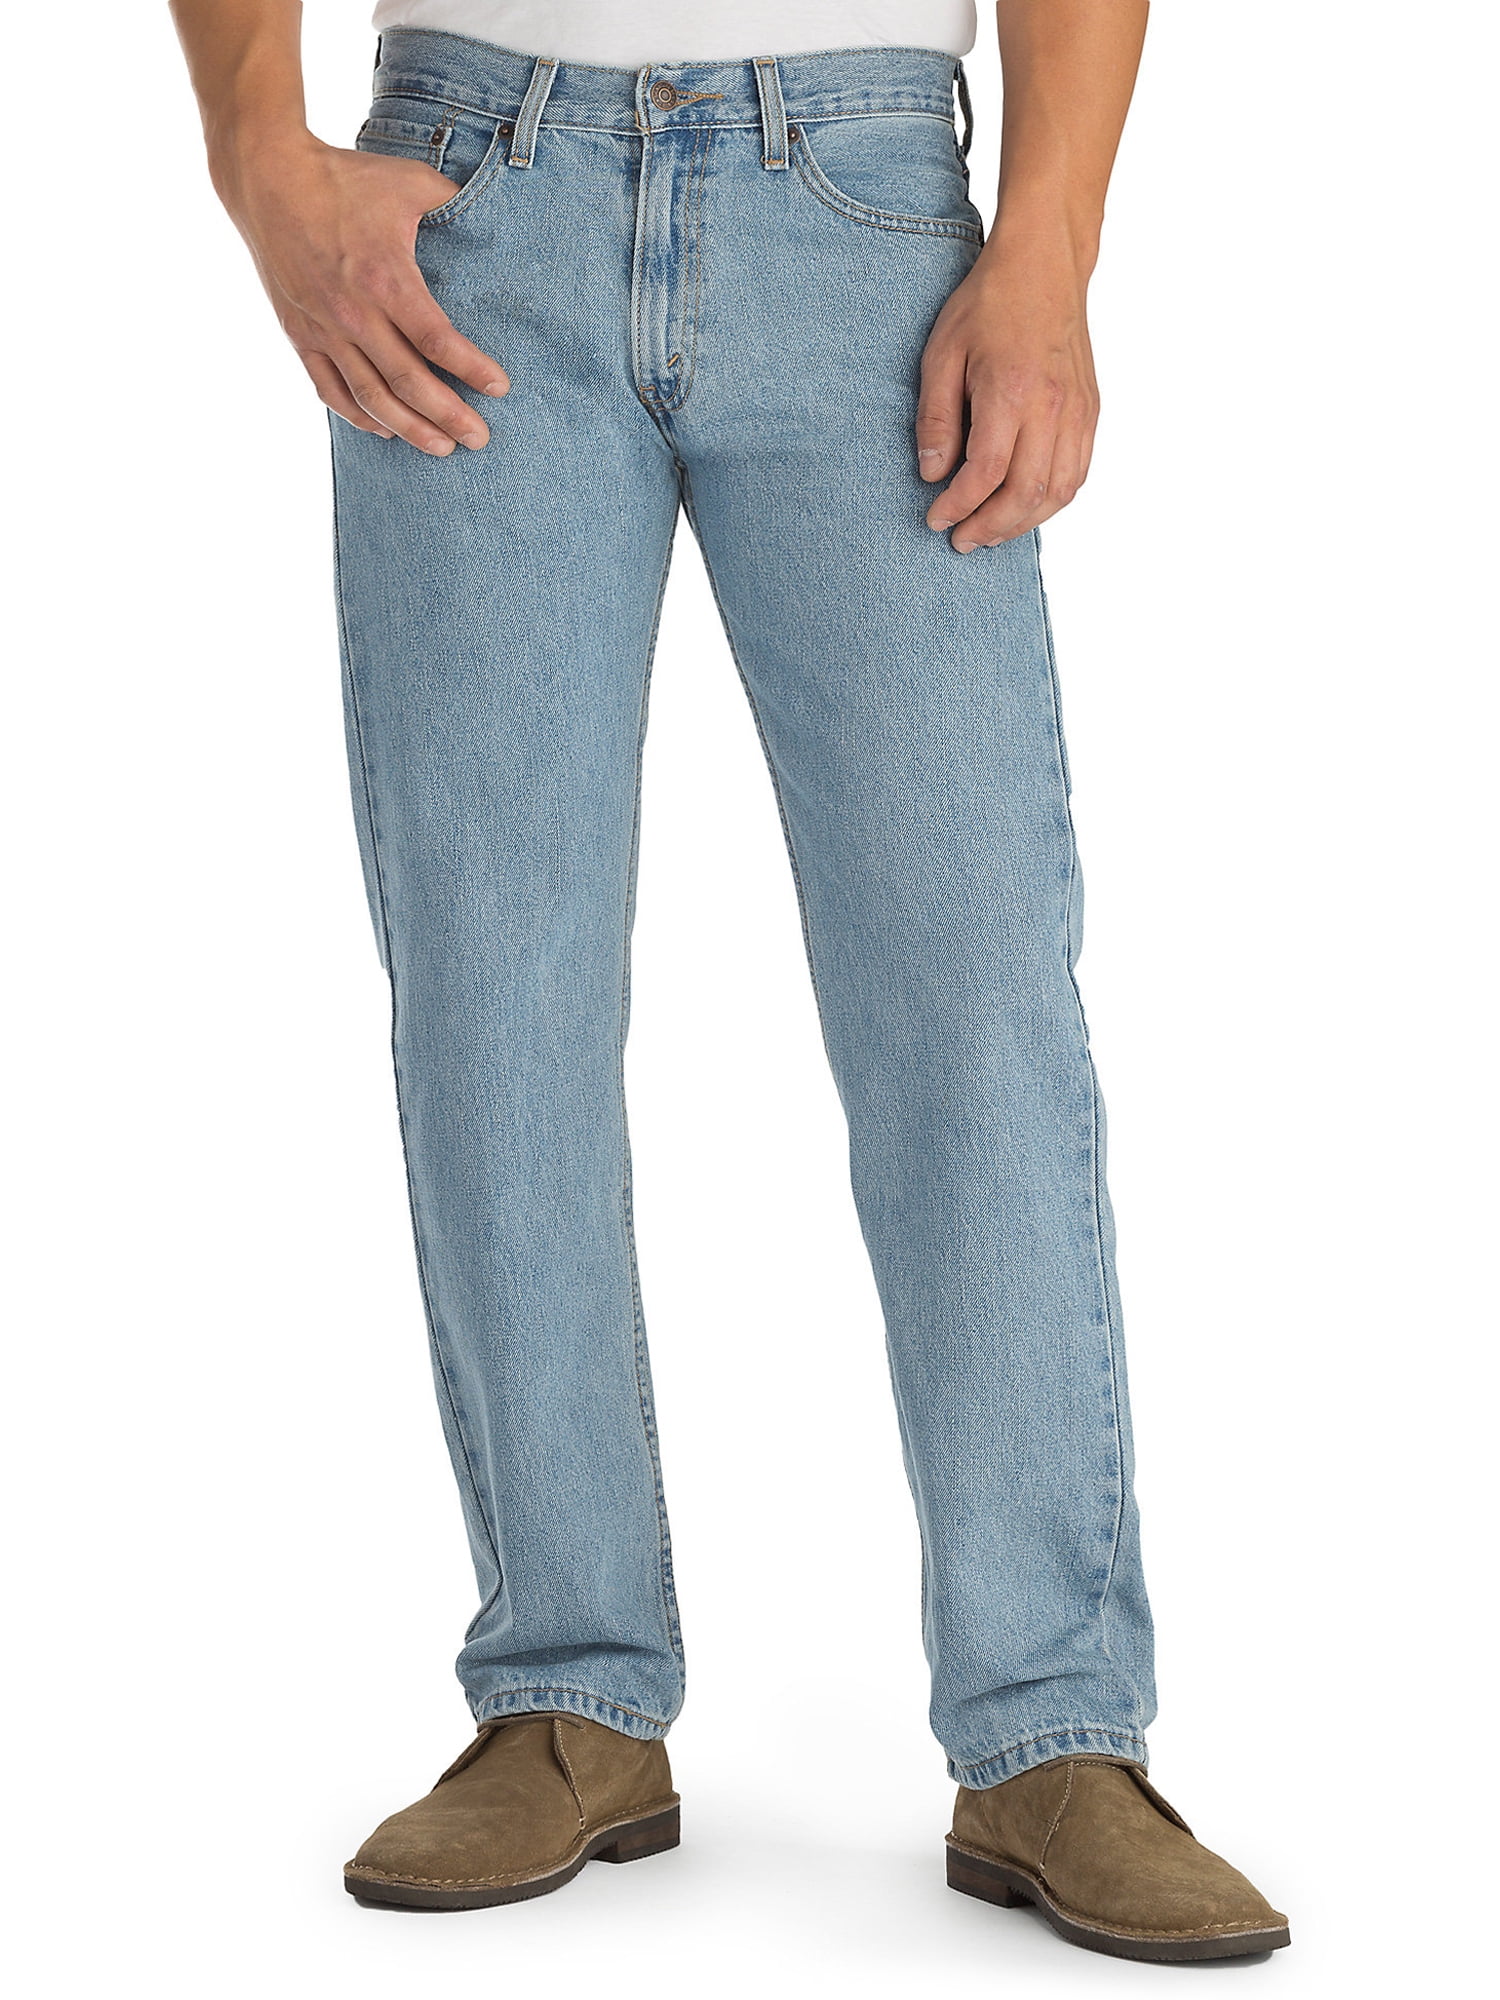 Top 41+ imagen levi signature jeans men’s regular fit